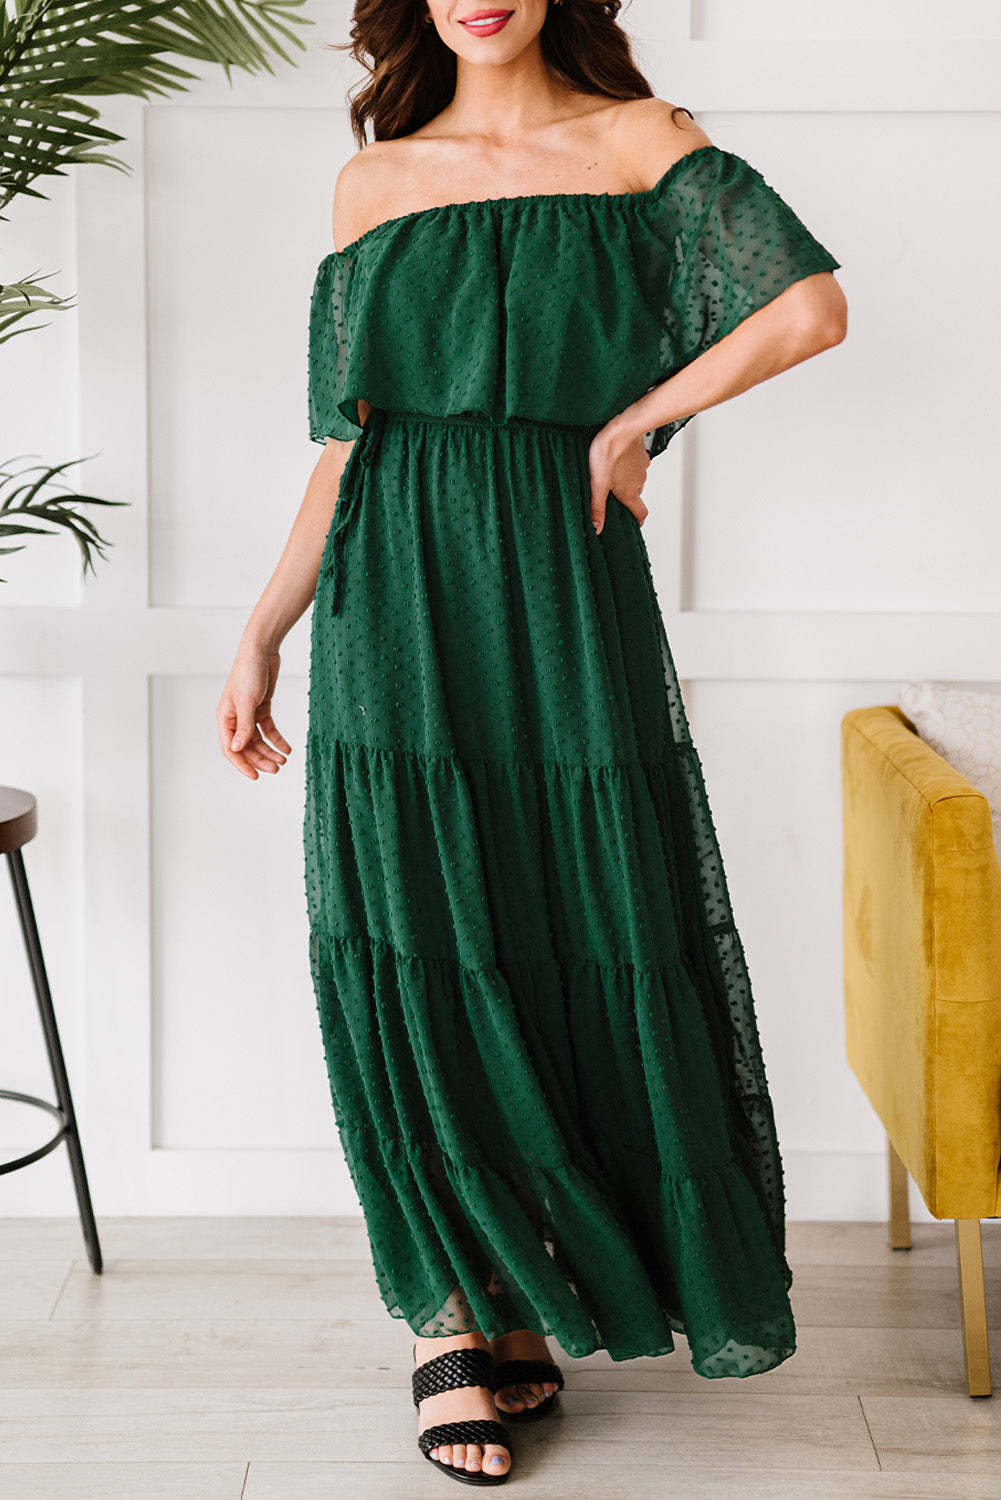 Green New Boho Off Shoulder Ruffle Swiss Dot Maxi Dress $ 44.99 - Evaless